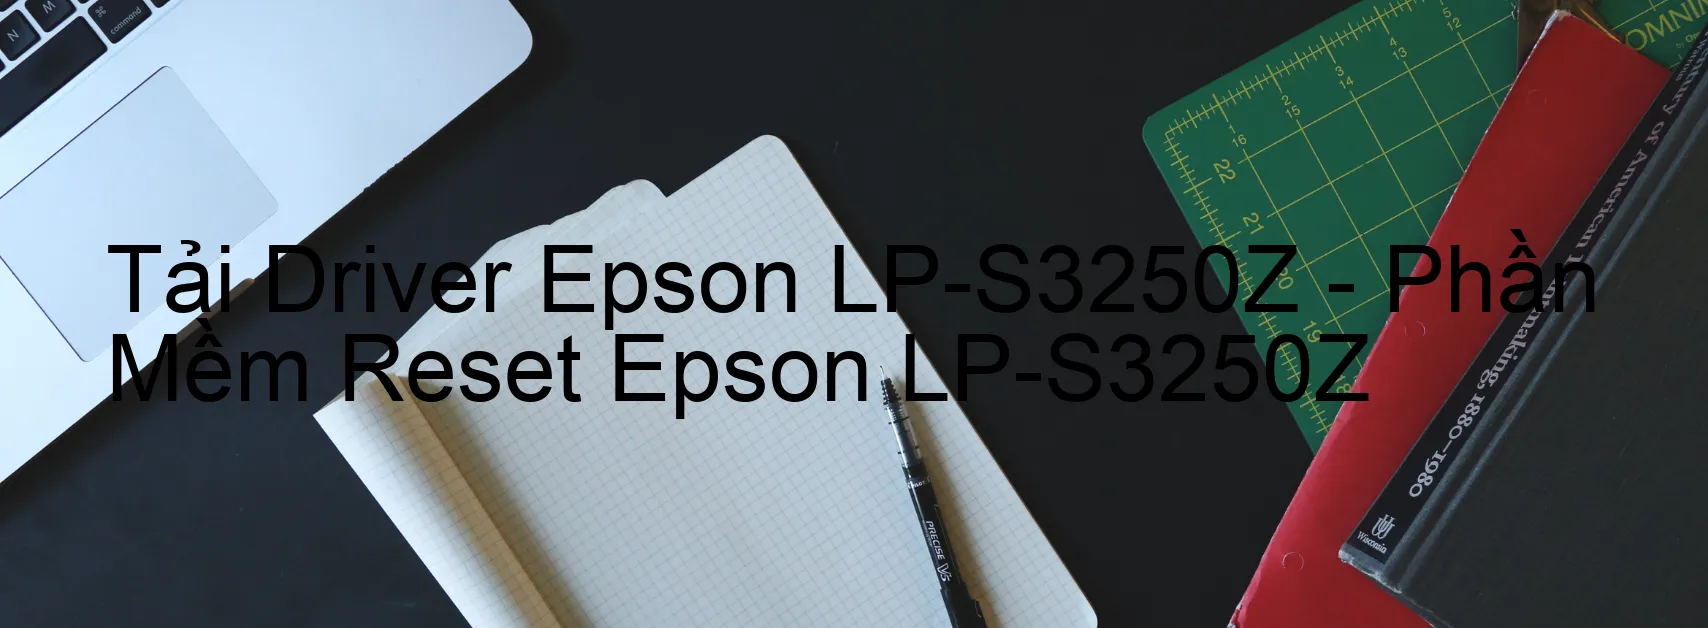 Driver Epson LP-S3250Z, Phần Mềm Reset Epson LP-S3250Z